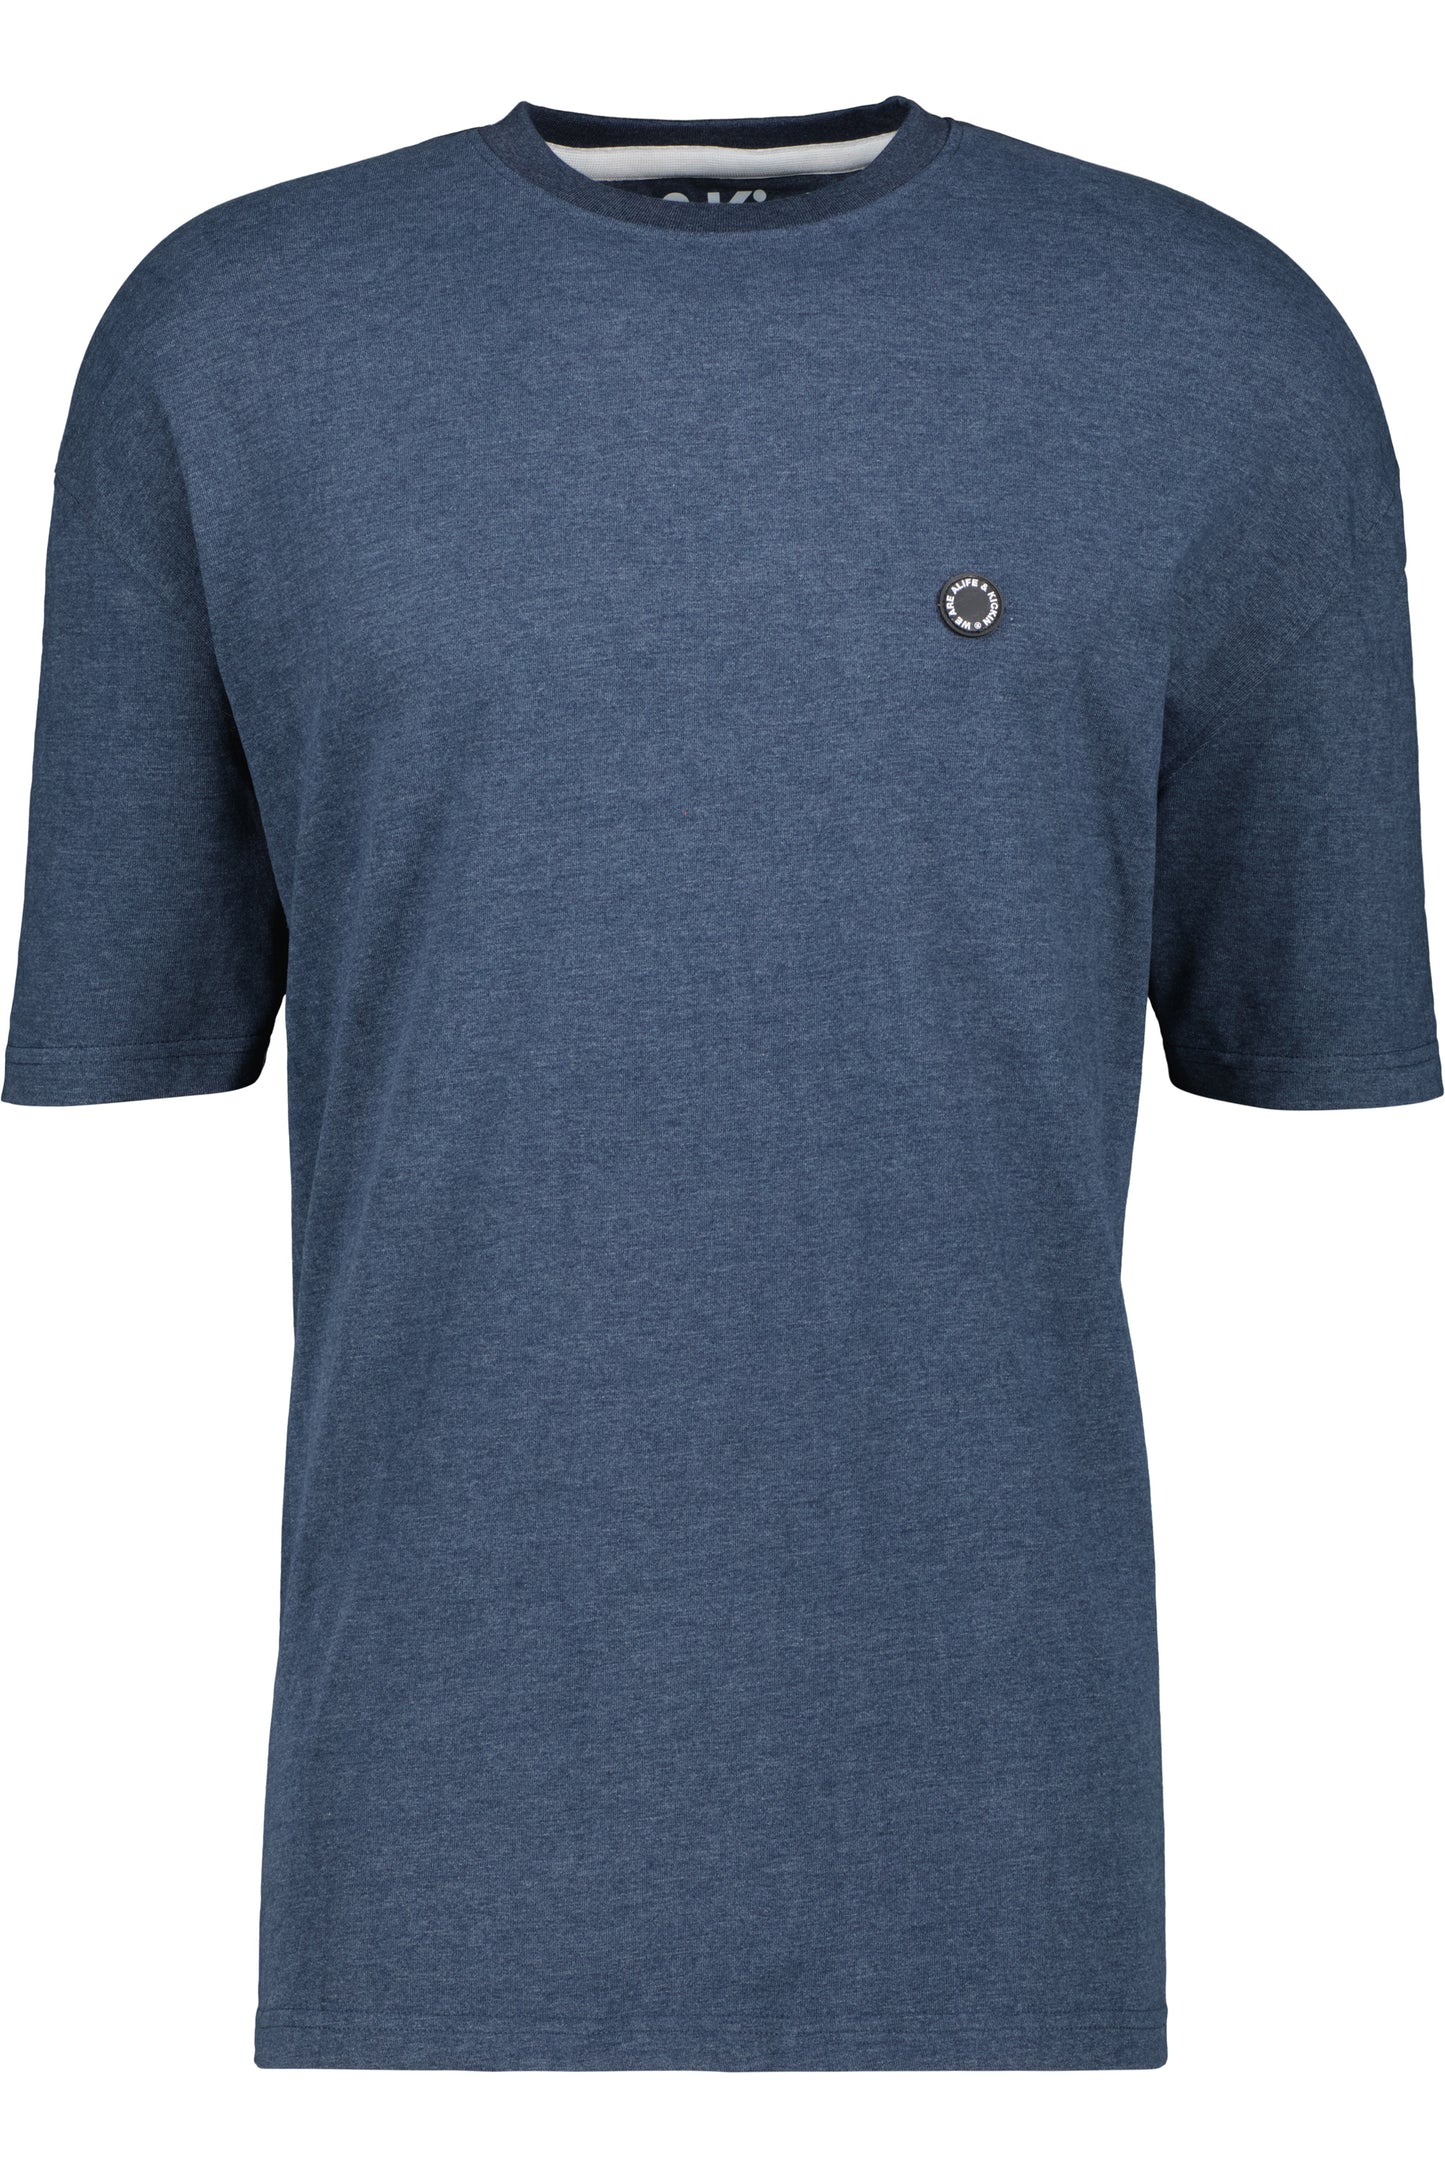 Trendiges Oversize T-Shirt PittAK A für modebewusste Herren Dunkelblau